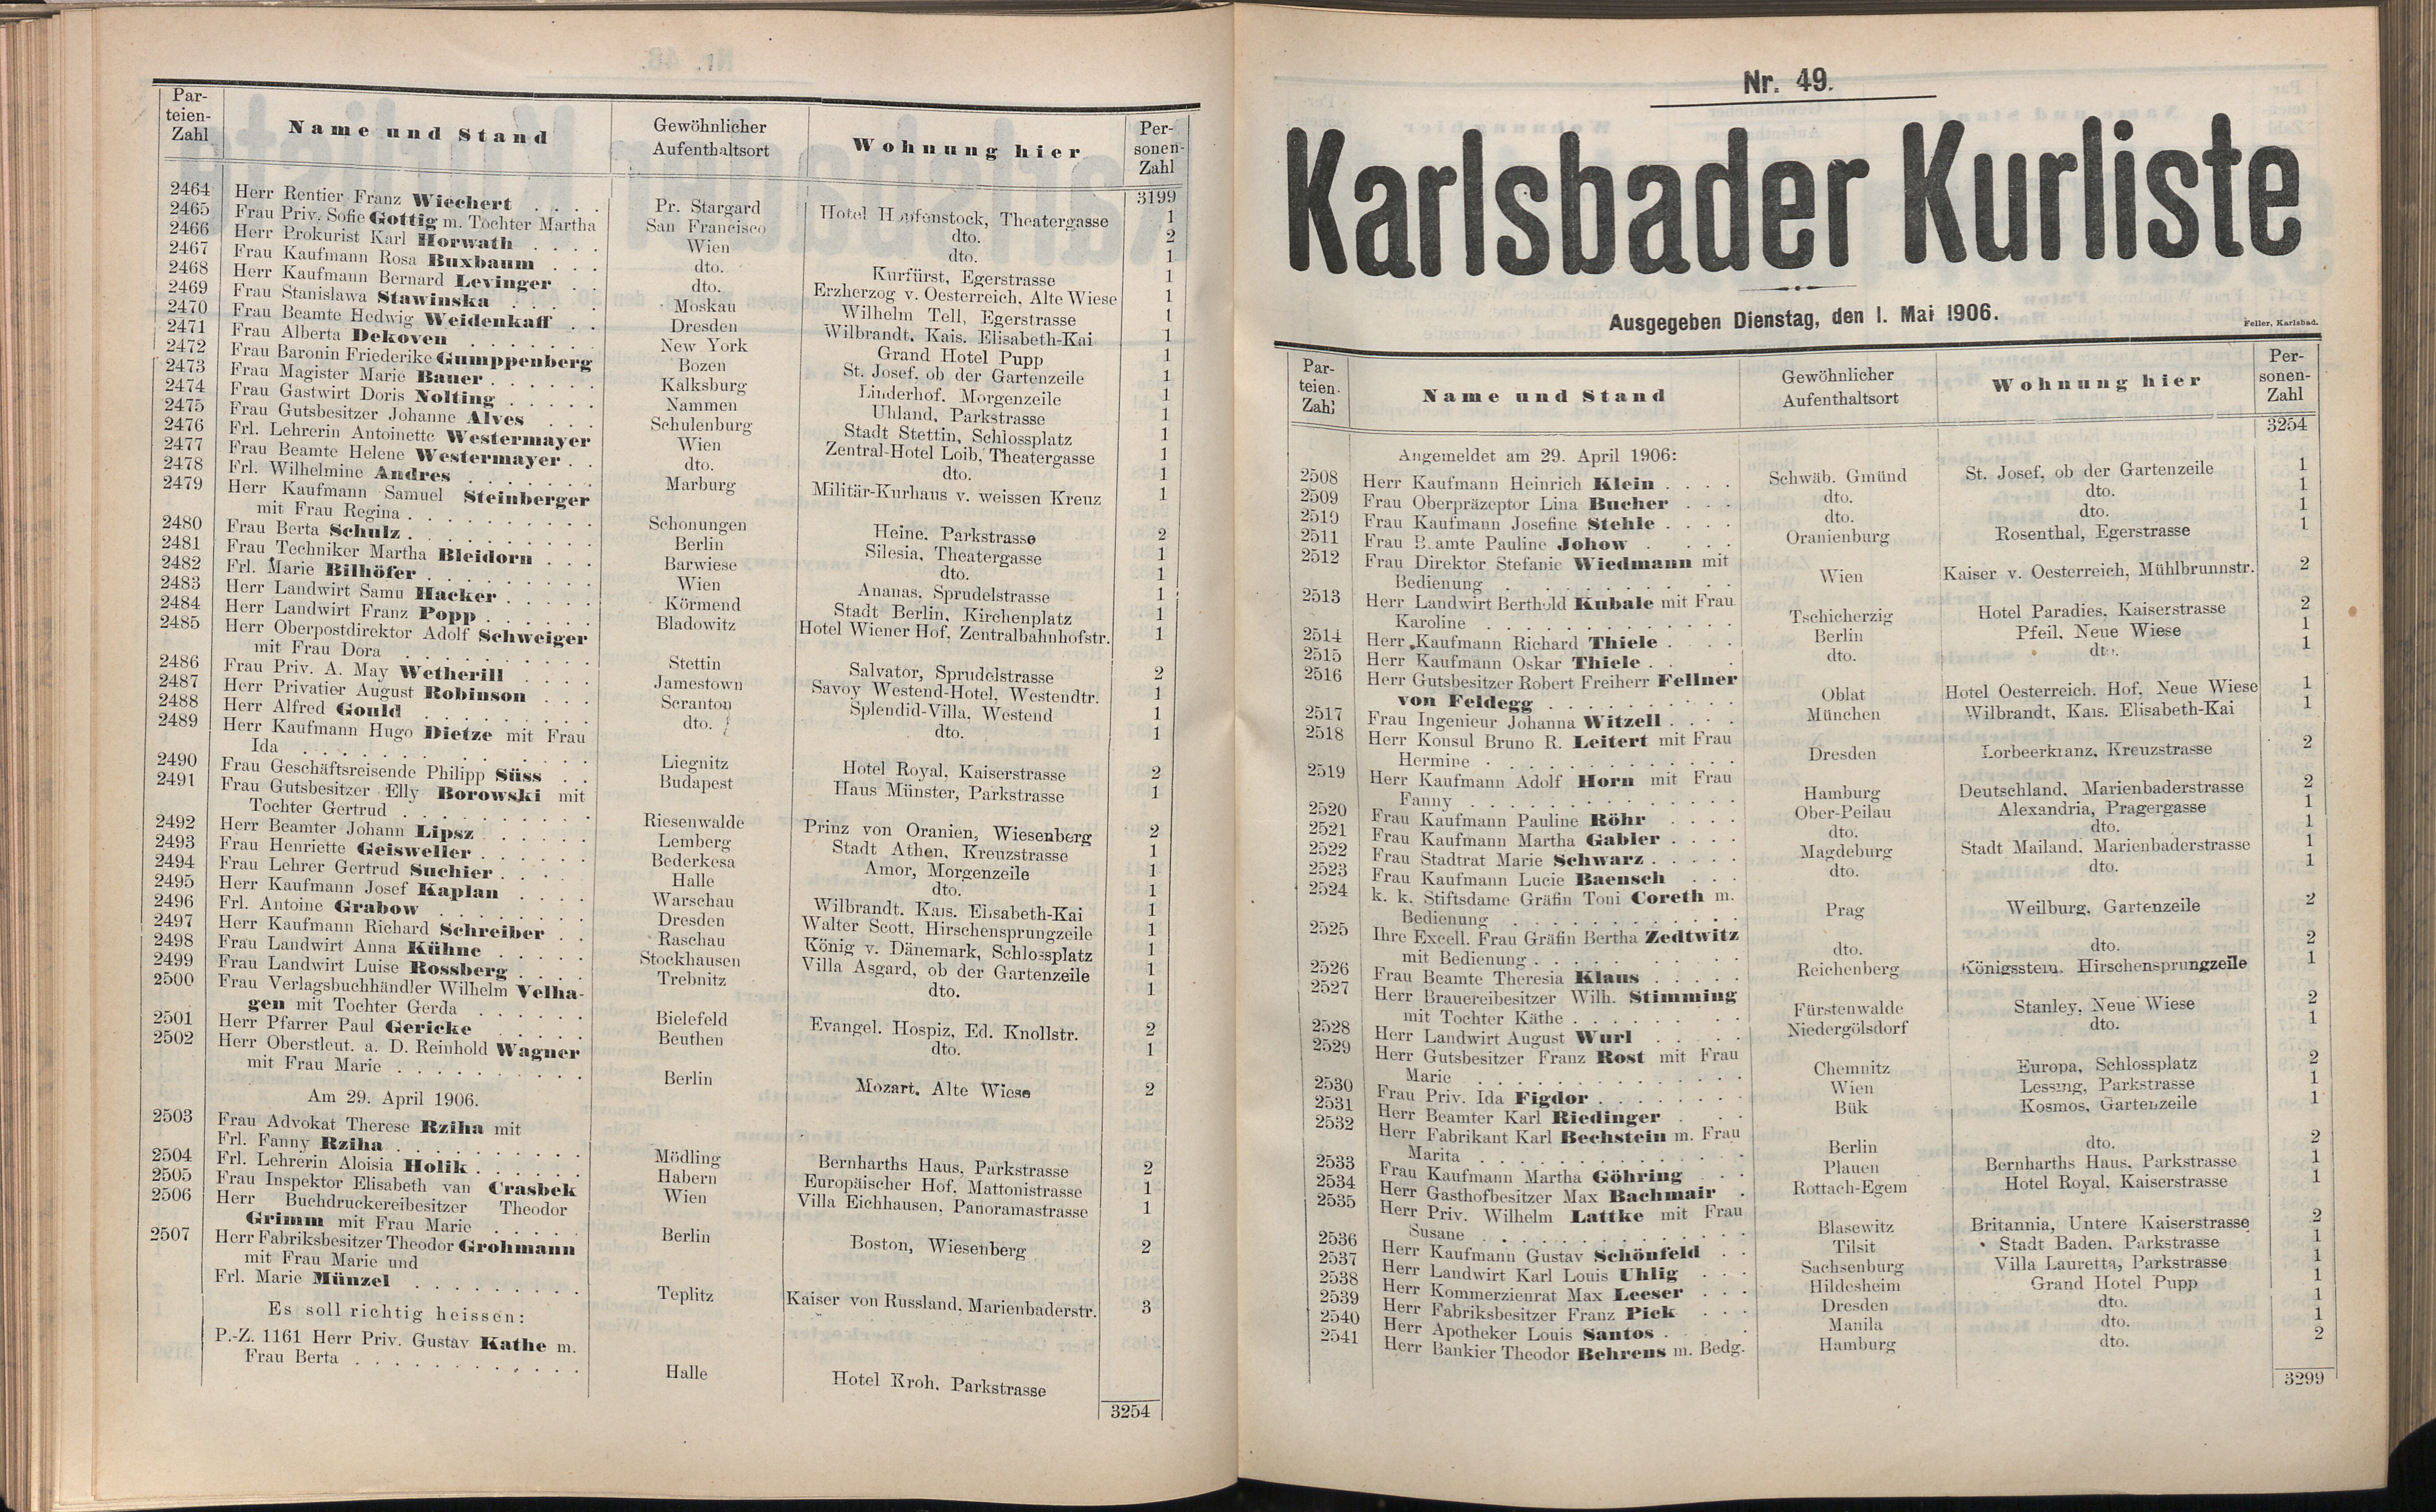 162. soap-kv_knihovna_karlsbader-kurliste-1906_1630